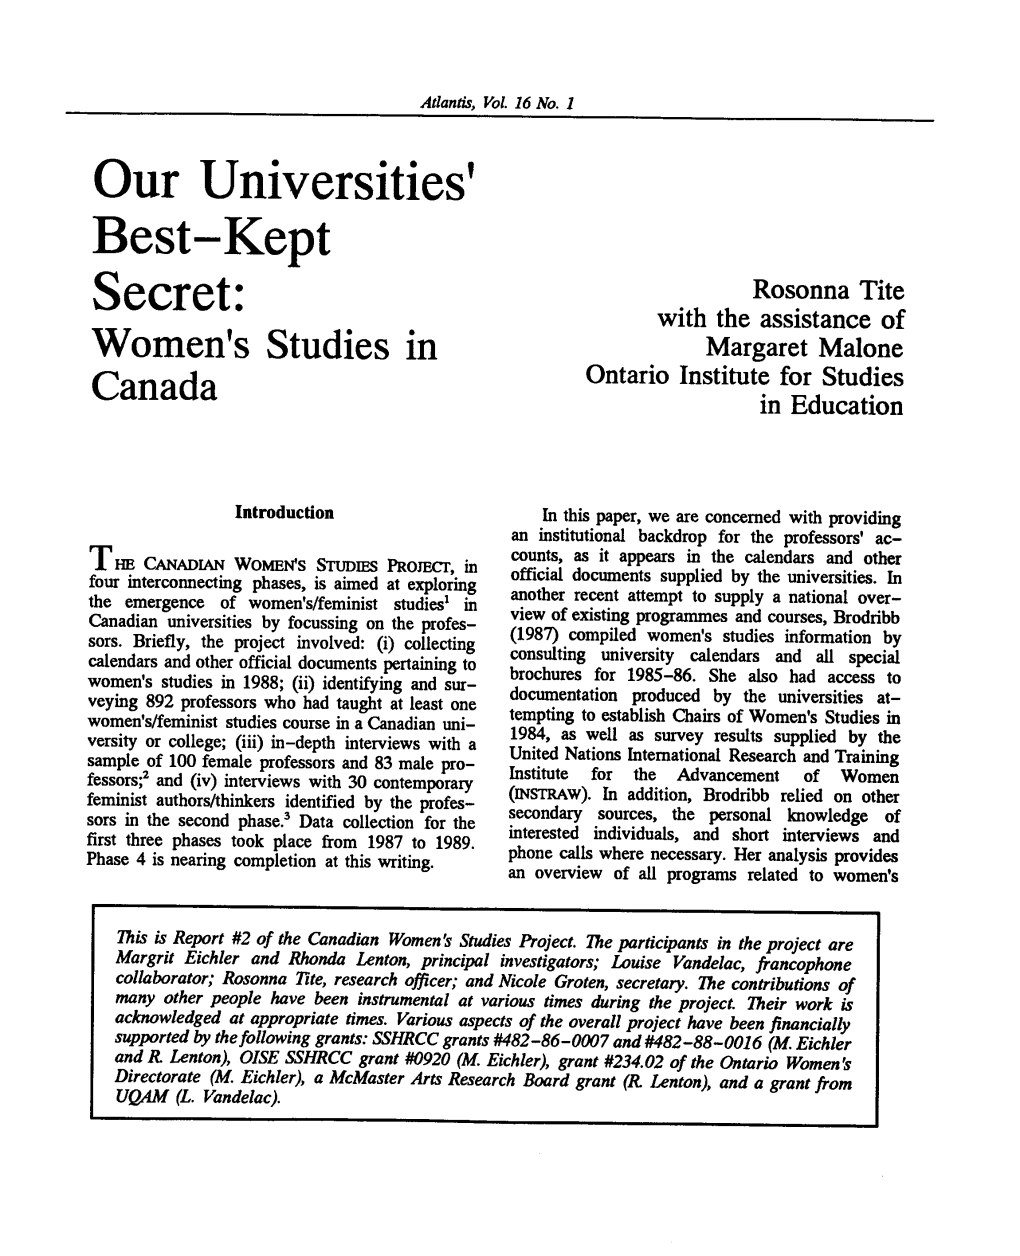 Our Universities1 Best-Kept Secret